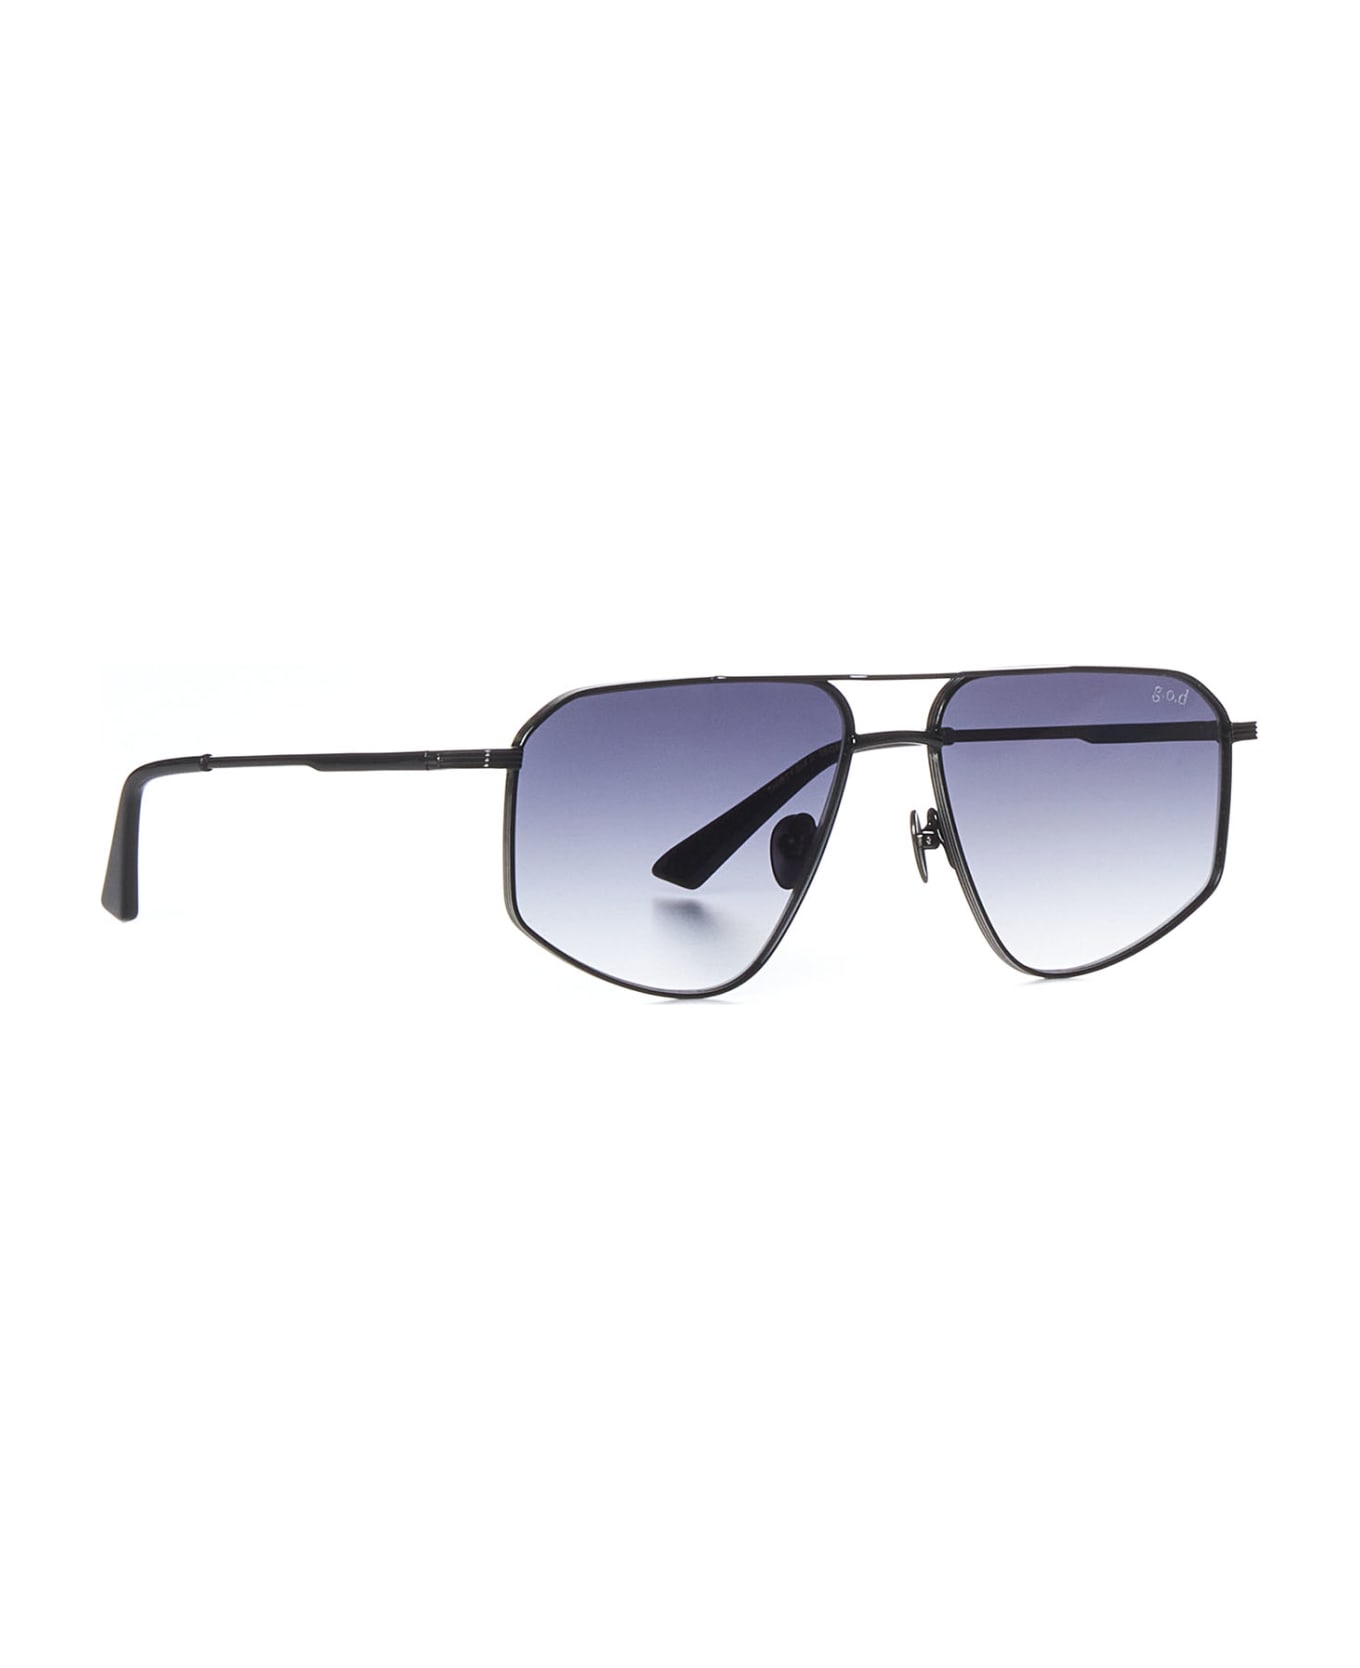 g.o.d Sunglasses - Black silver grey